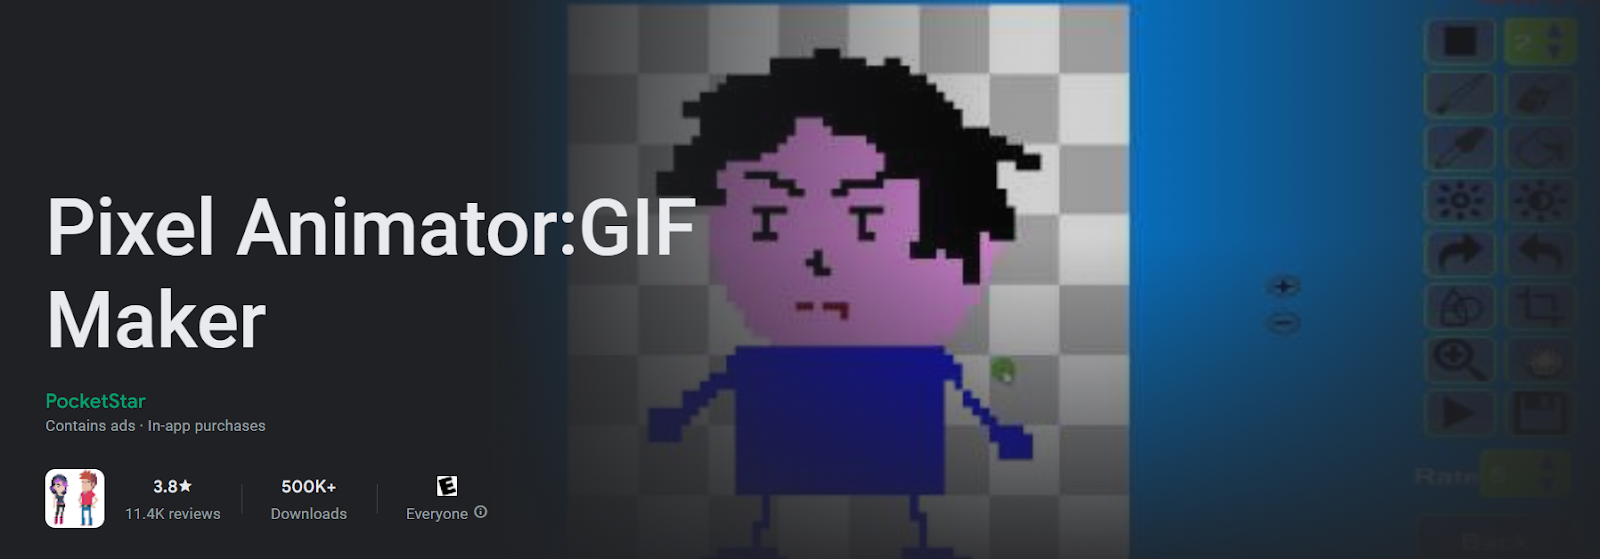 pixel animator gif maker app